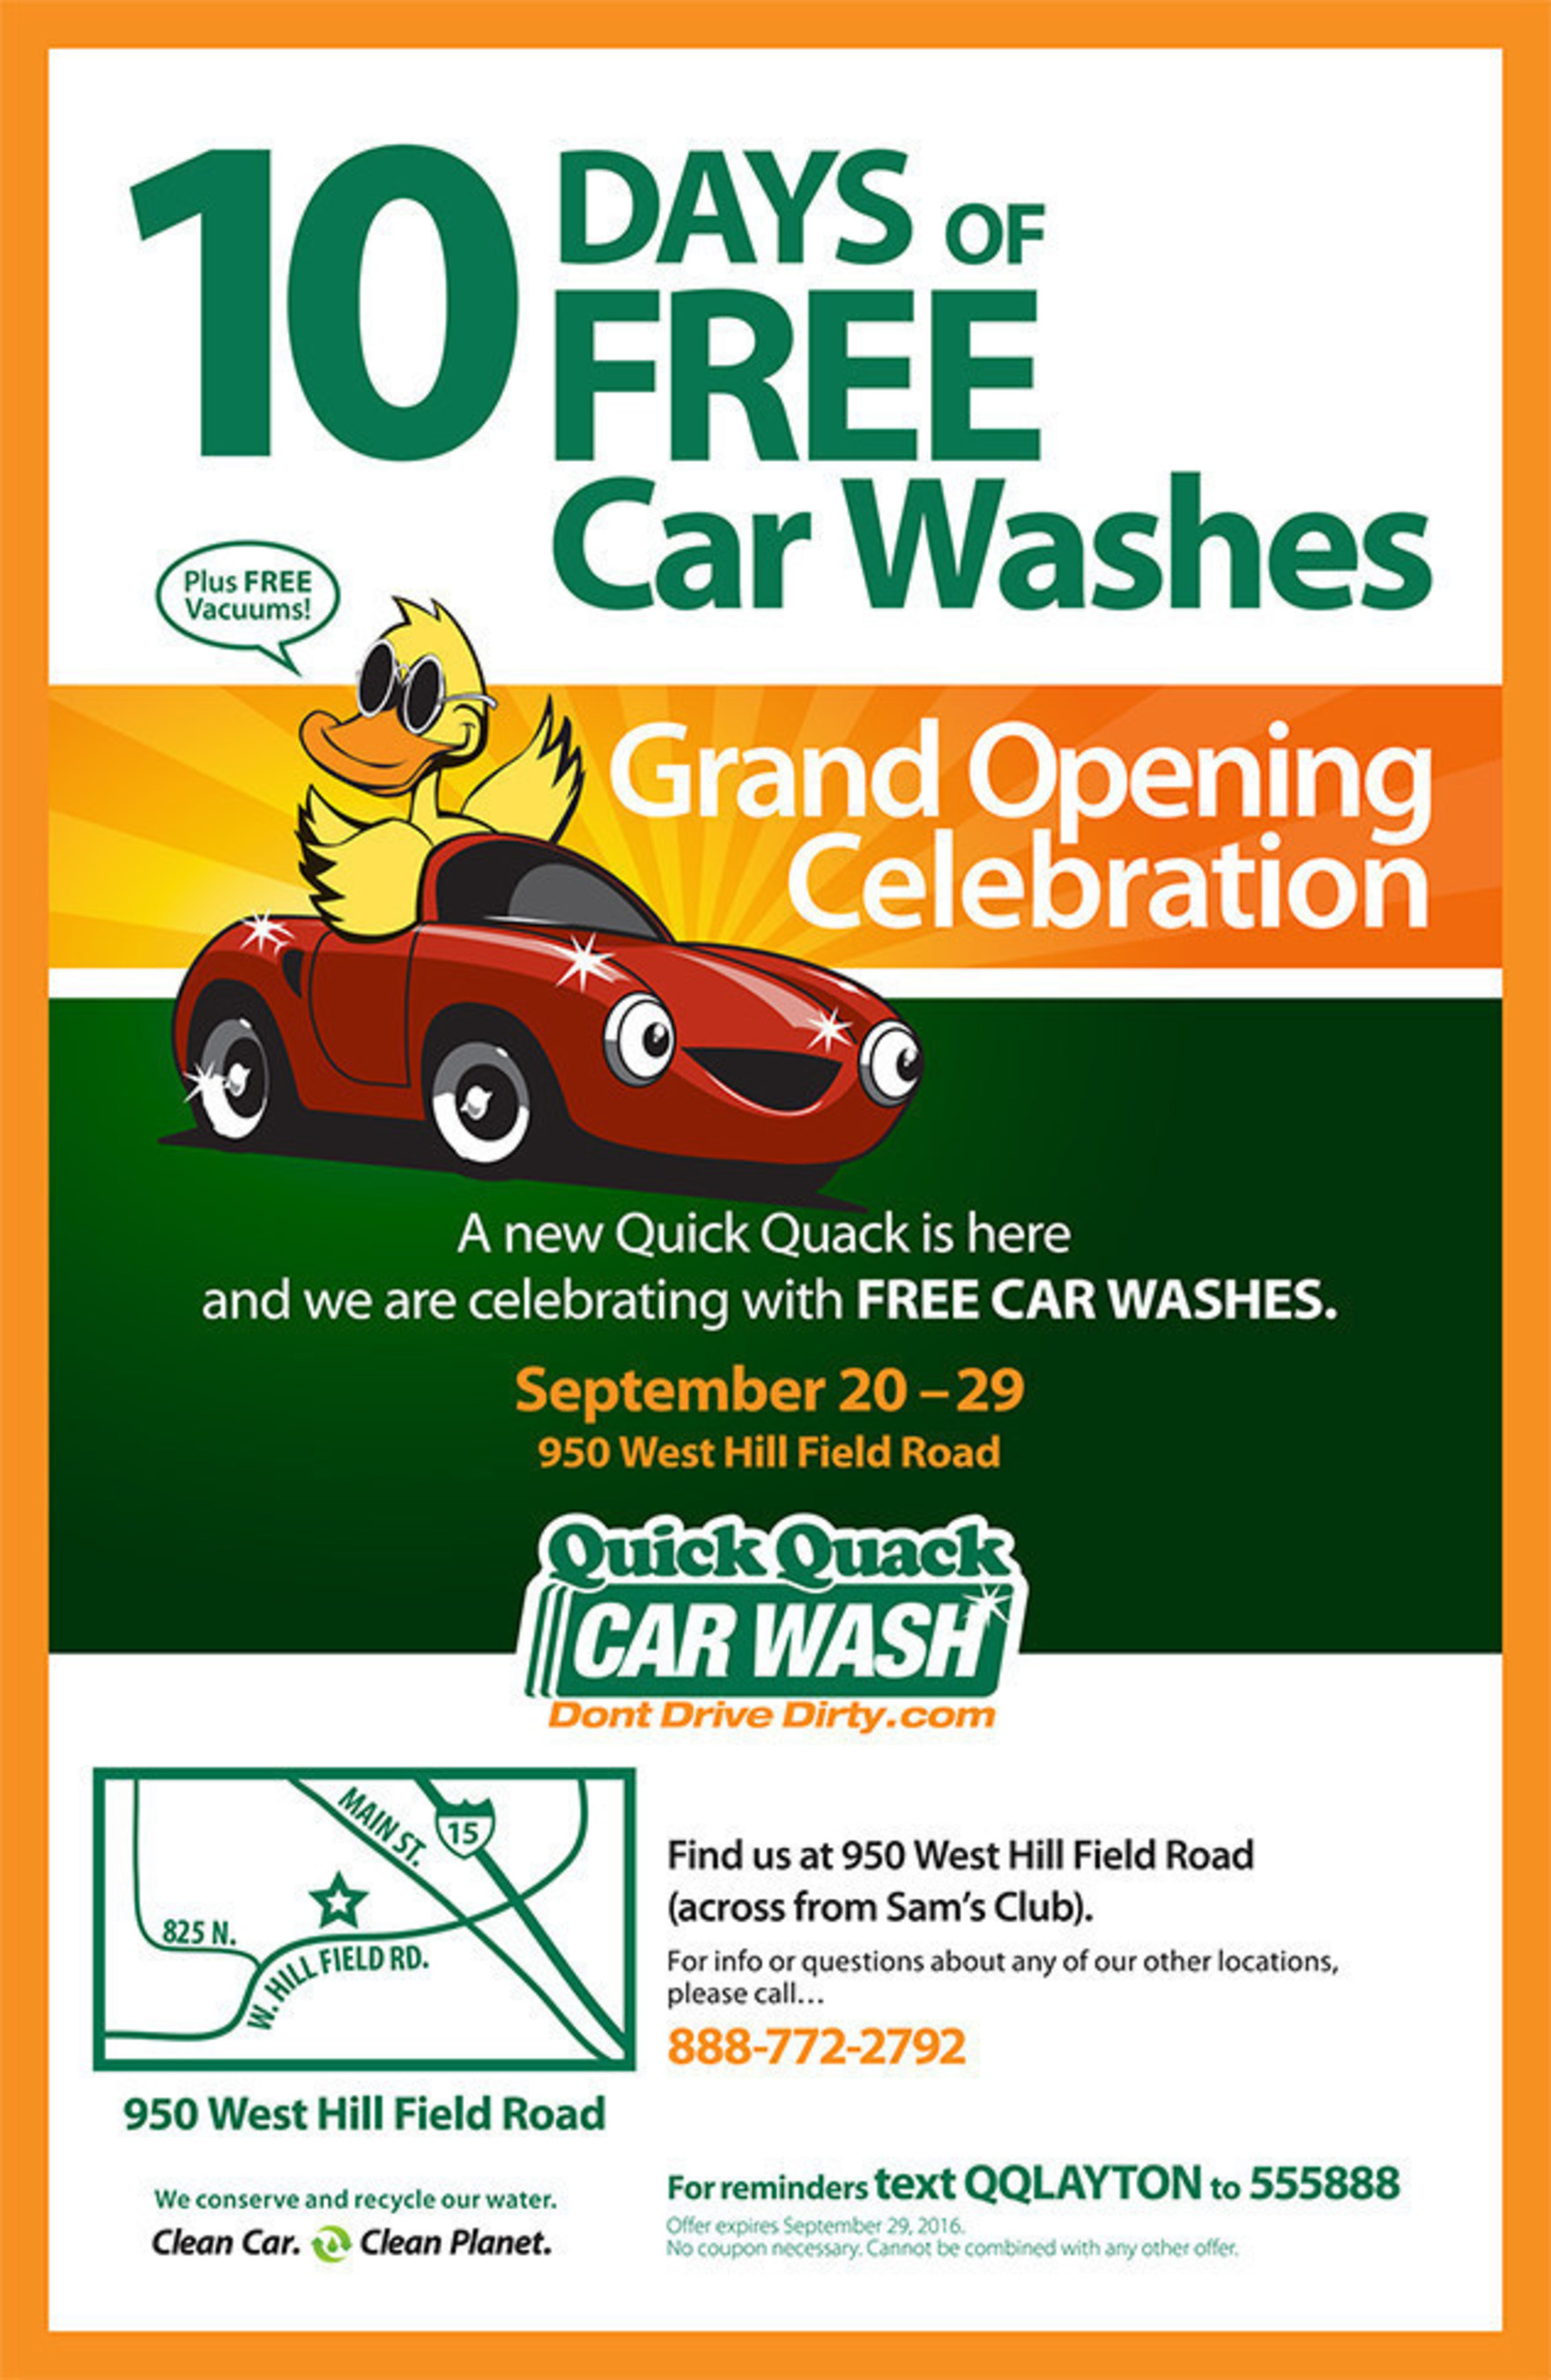 Quick Quack Car Wash Celebrates Layton Car Wash Location Acquisition